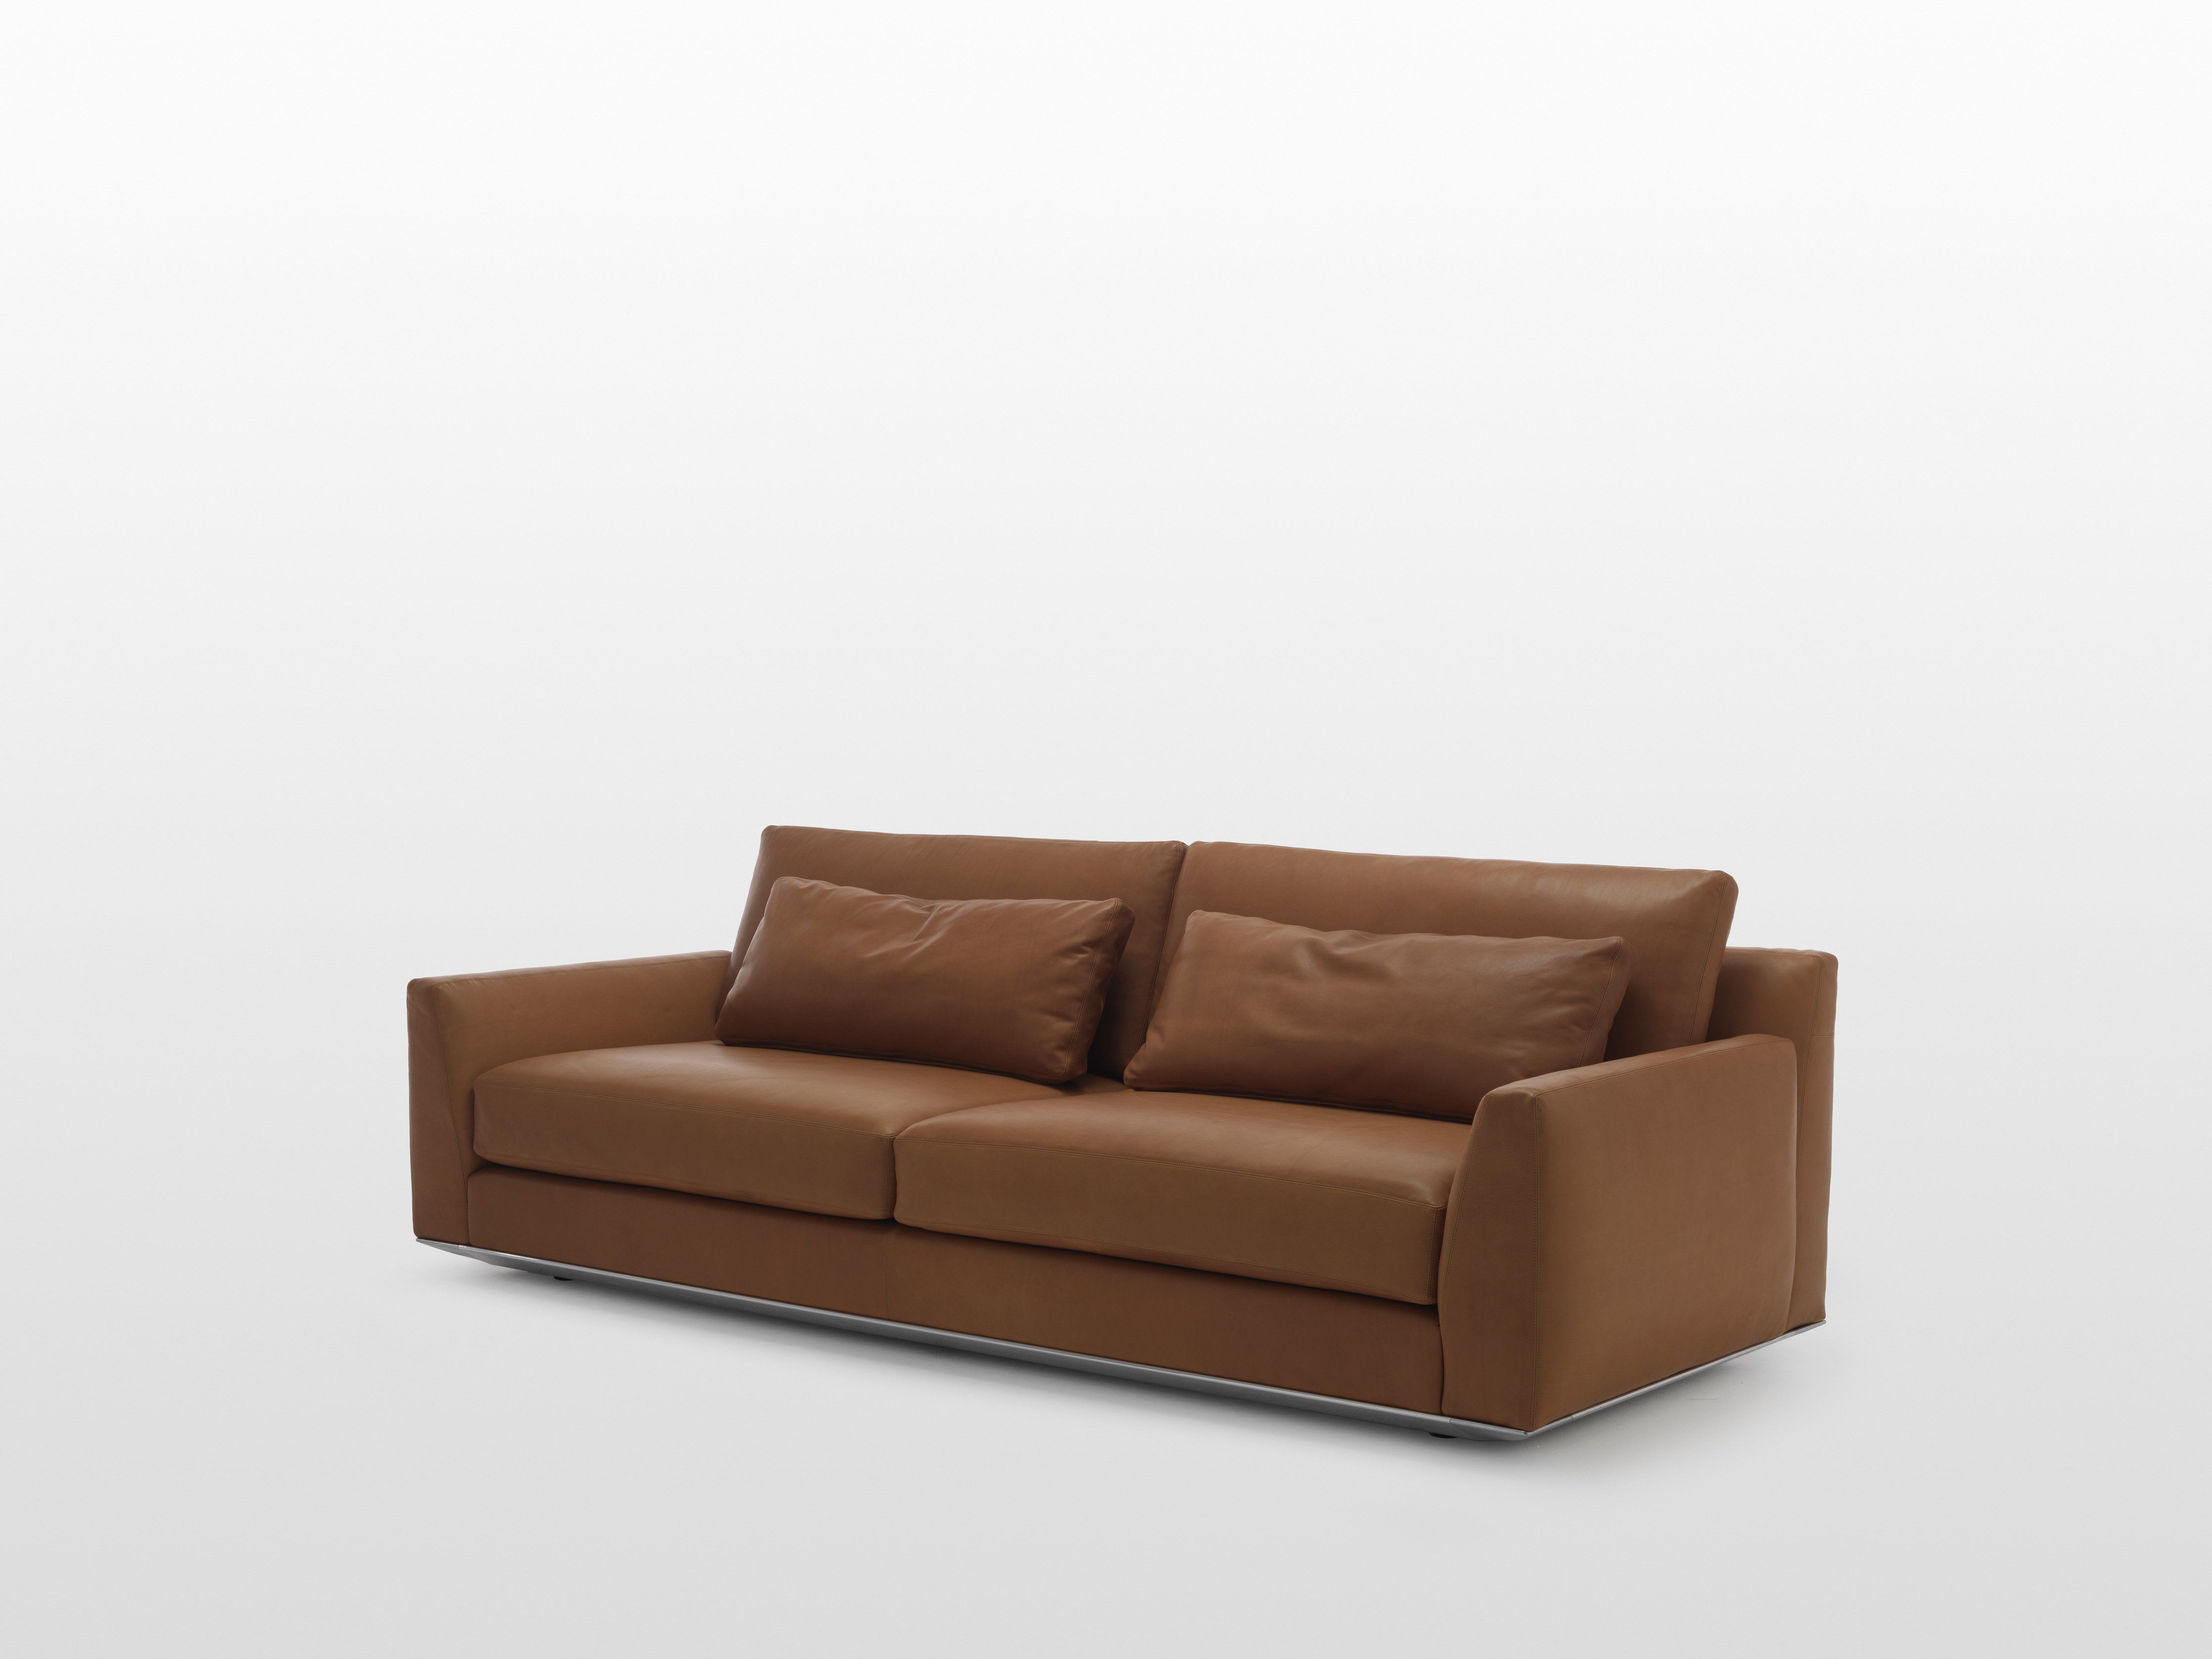 ELLINGTON Sofa by Casamania & Horm